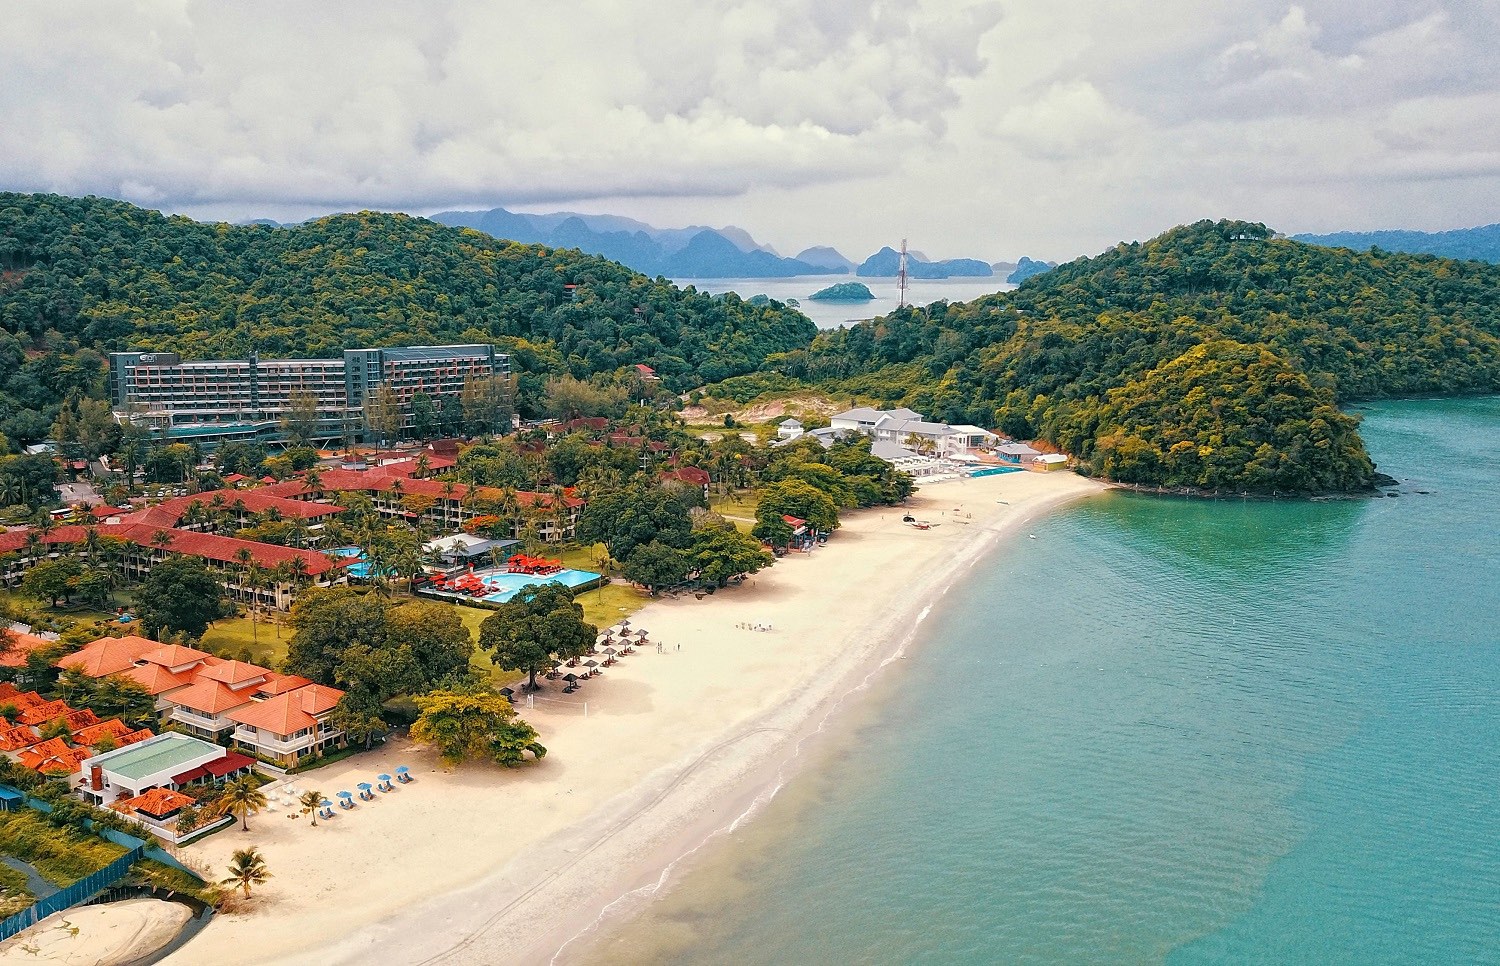 Holiday Villa Resort & Beachclub Langkawi from above, a tropical paradise